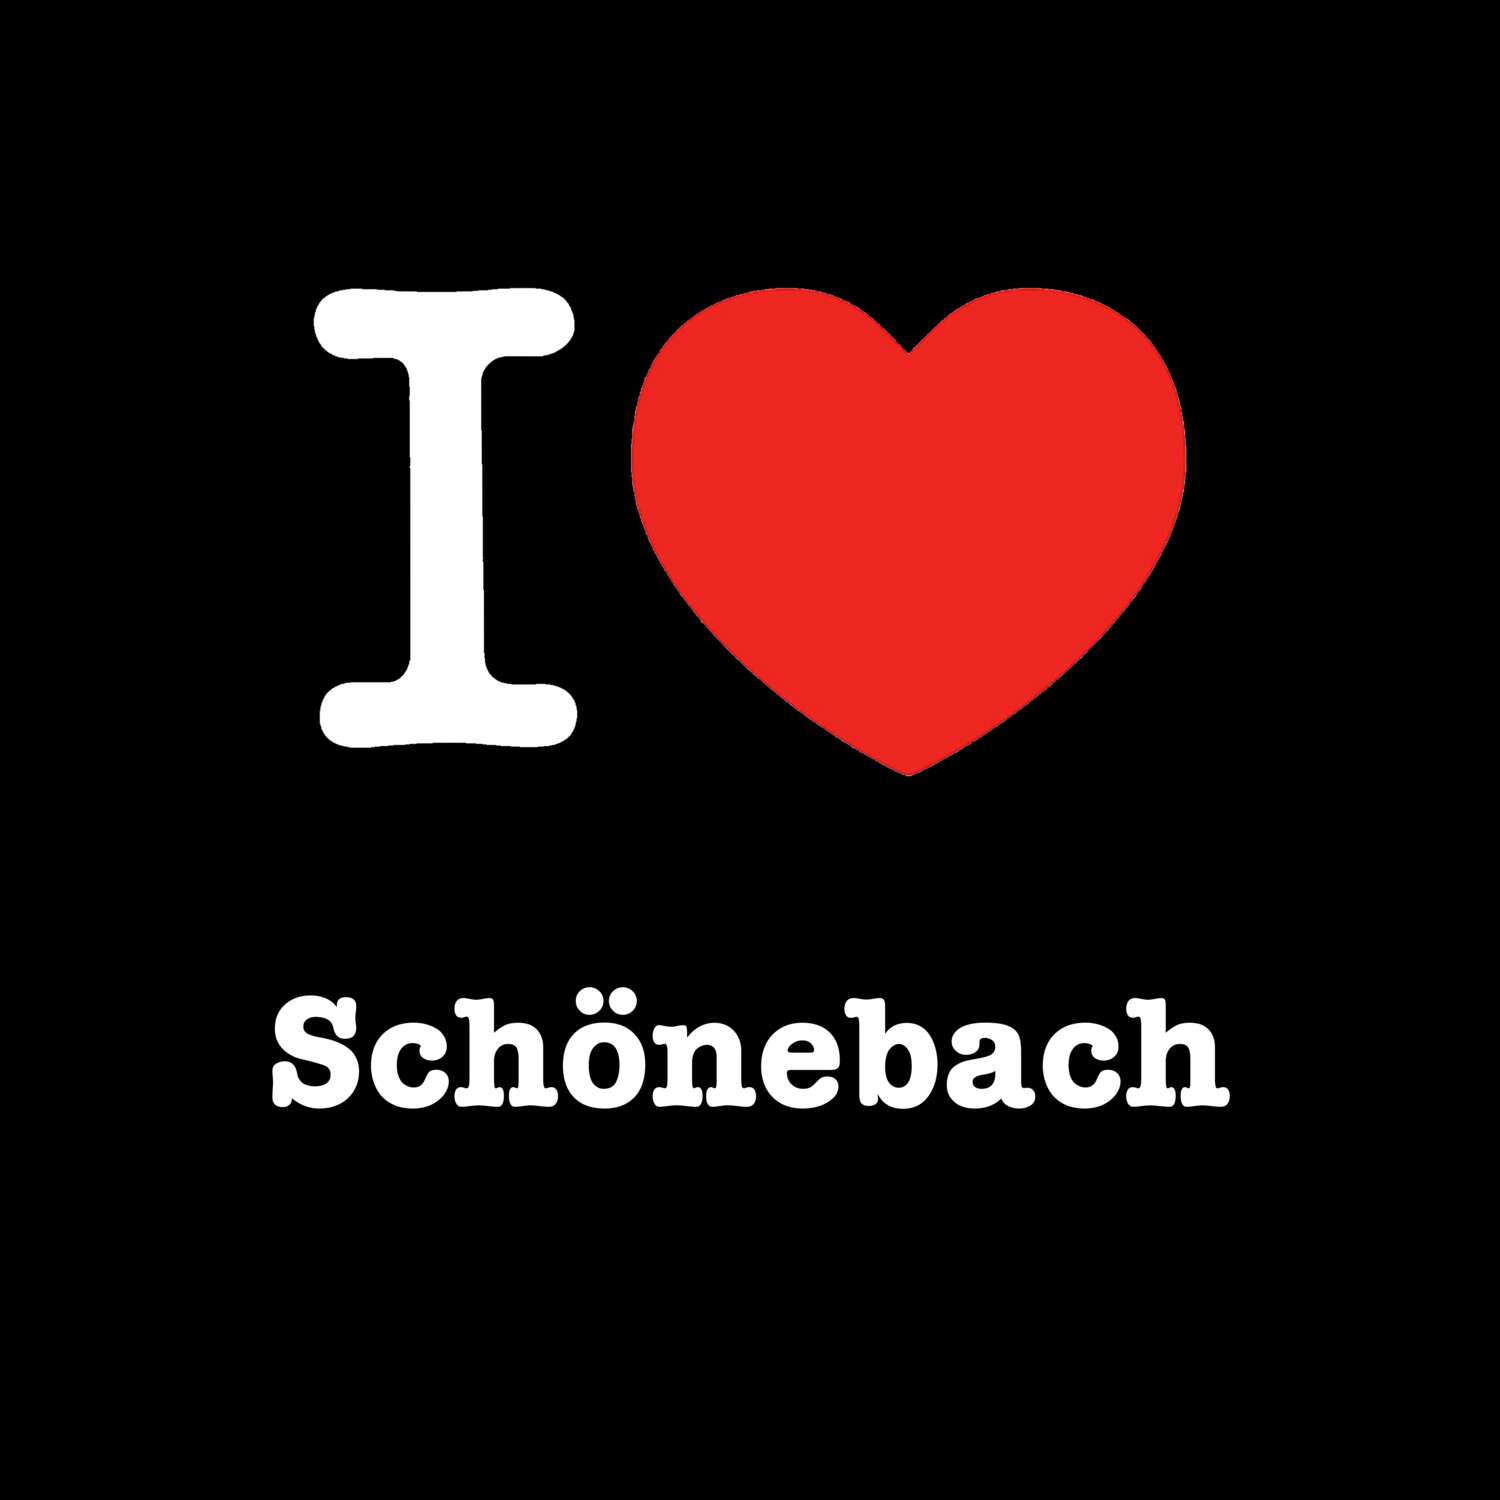 Schönebach T-Shirt »I love«